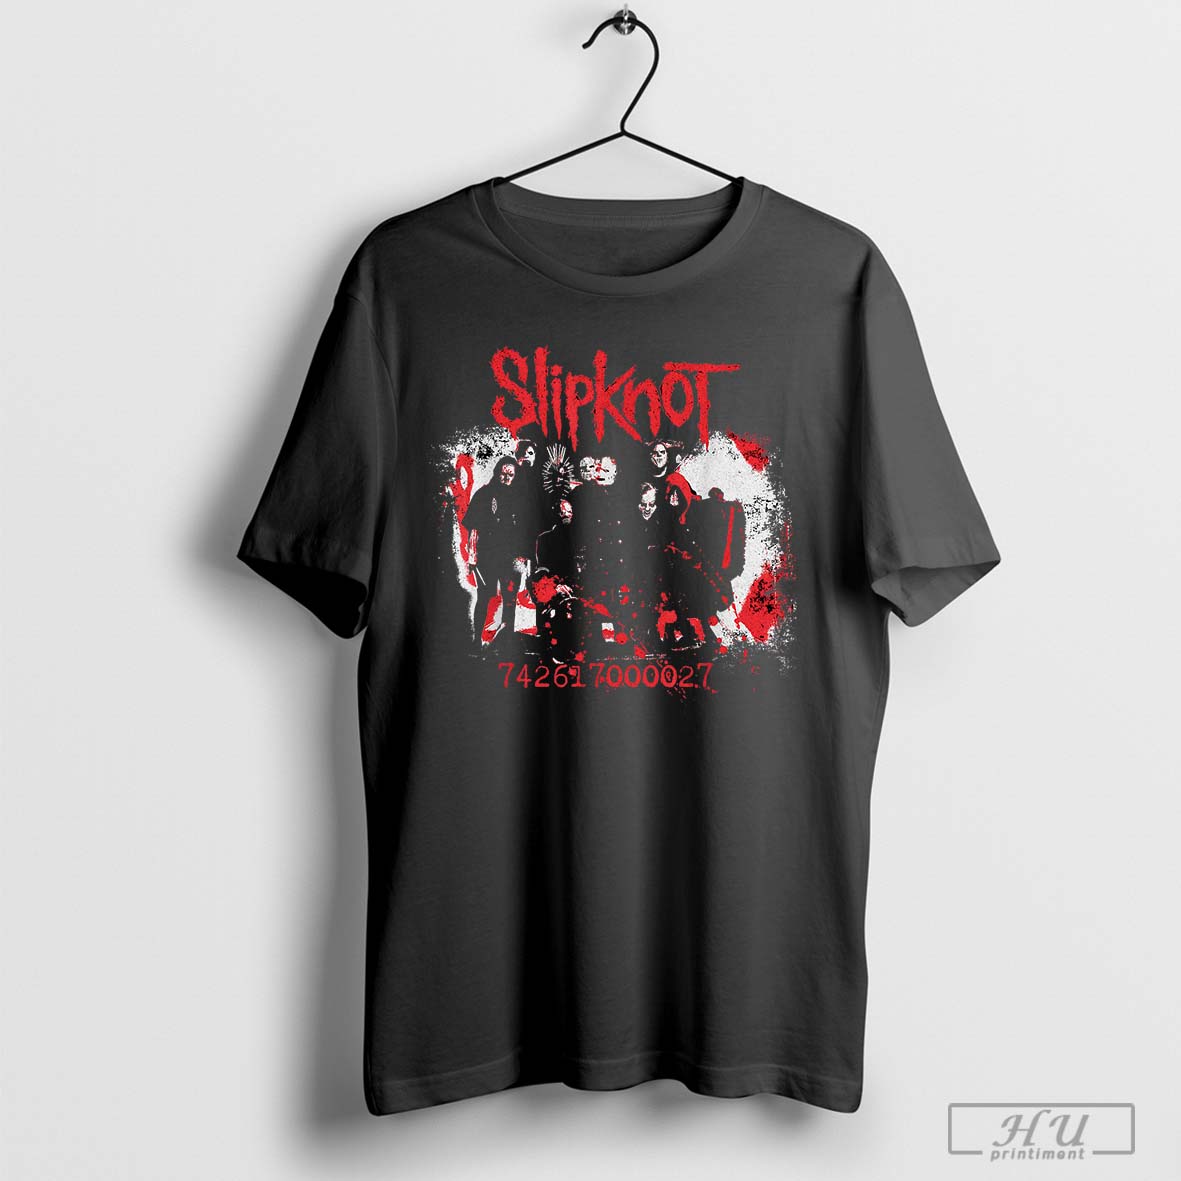 Slipknot Band Photo T-Shirt, Trending Shirt - Printiment